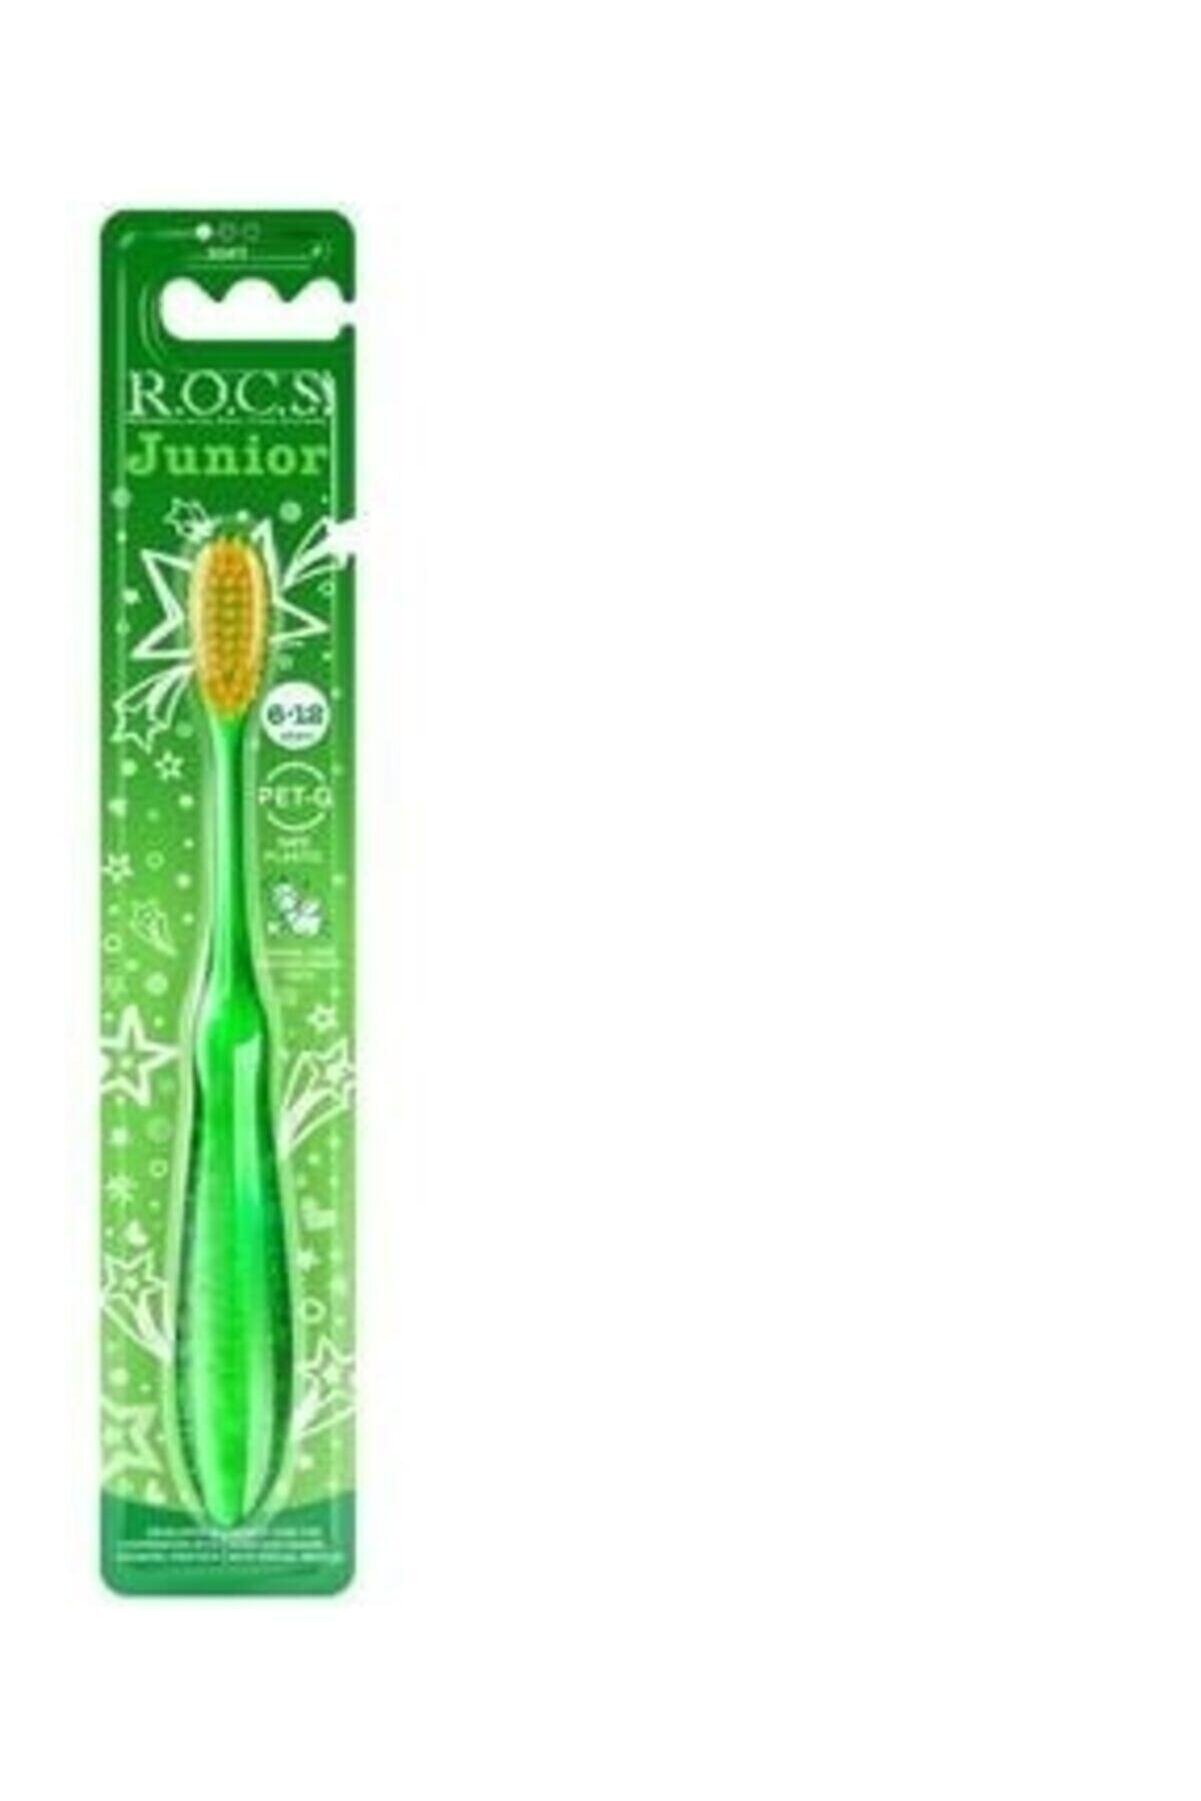 R.O.C.S. Rocs Junior 6-12 Yaş Diş Fırçası-yeşil